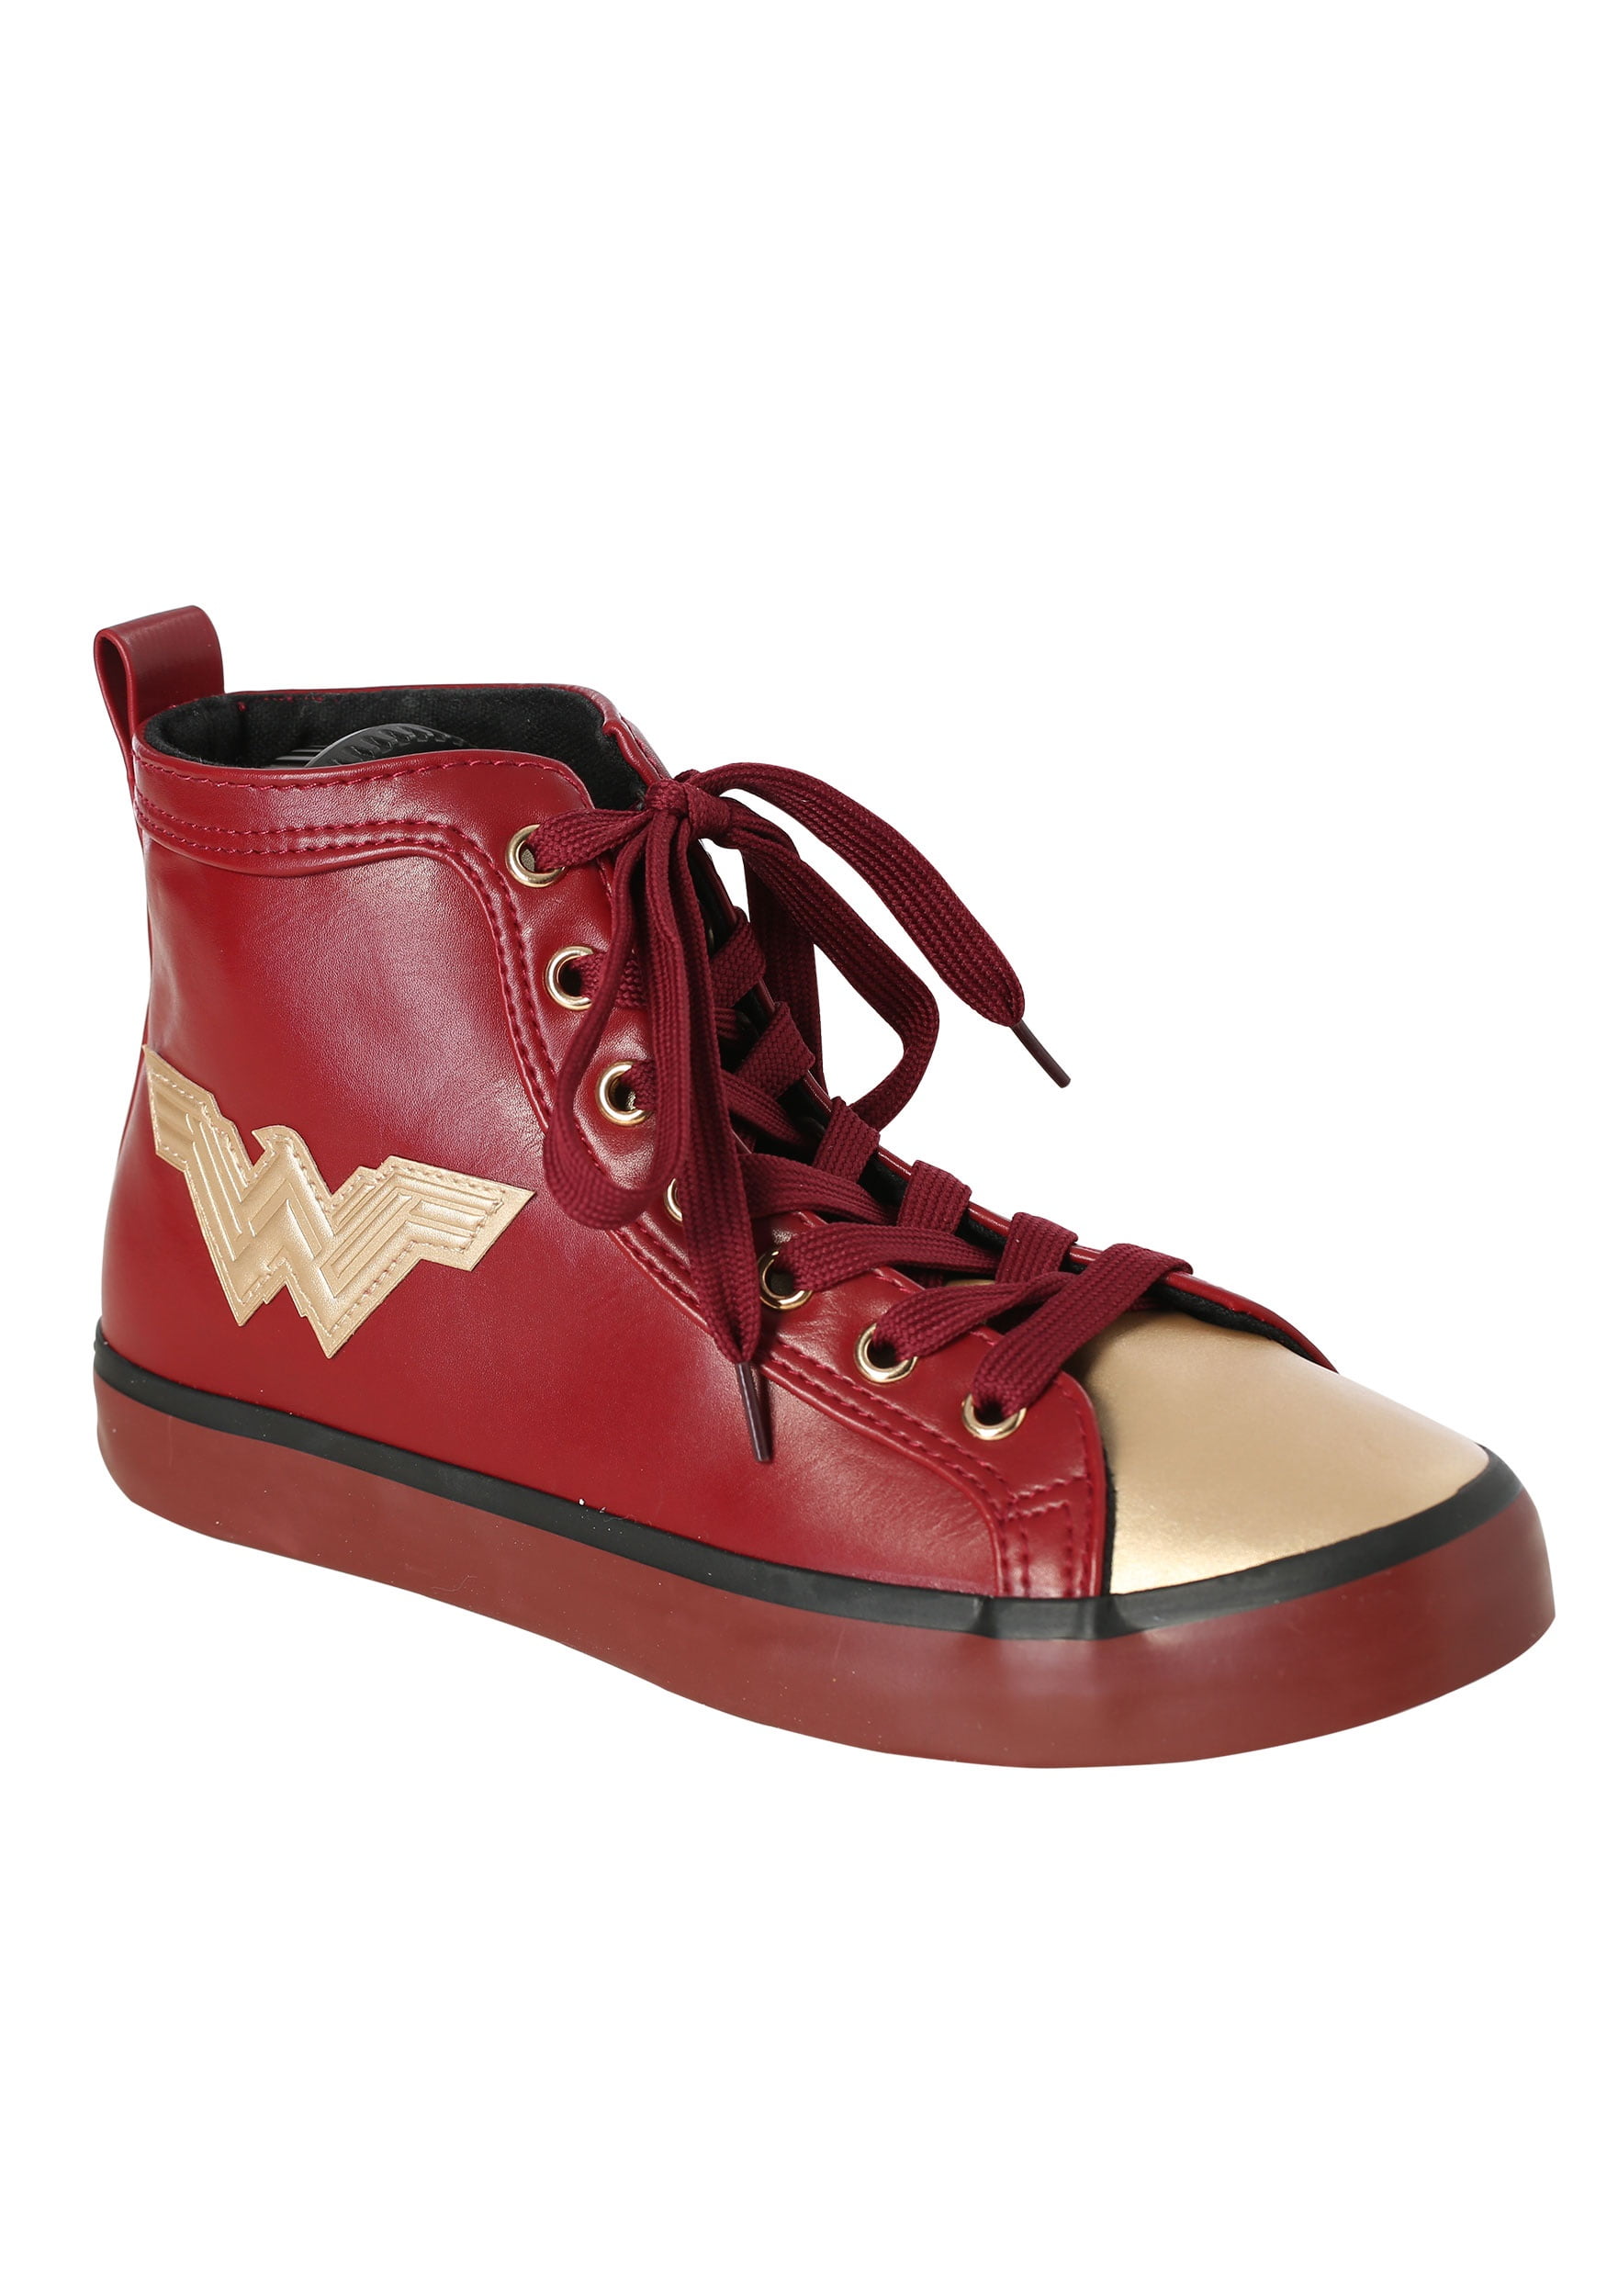 Wonder Woman Hi Top Womens Shoes 